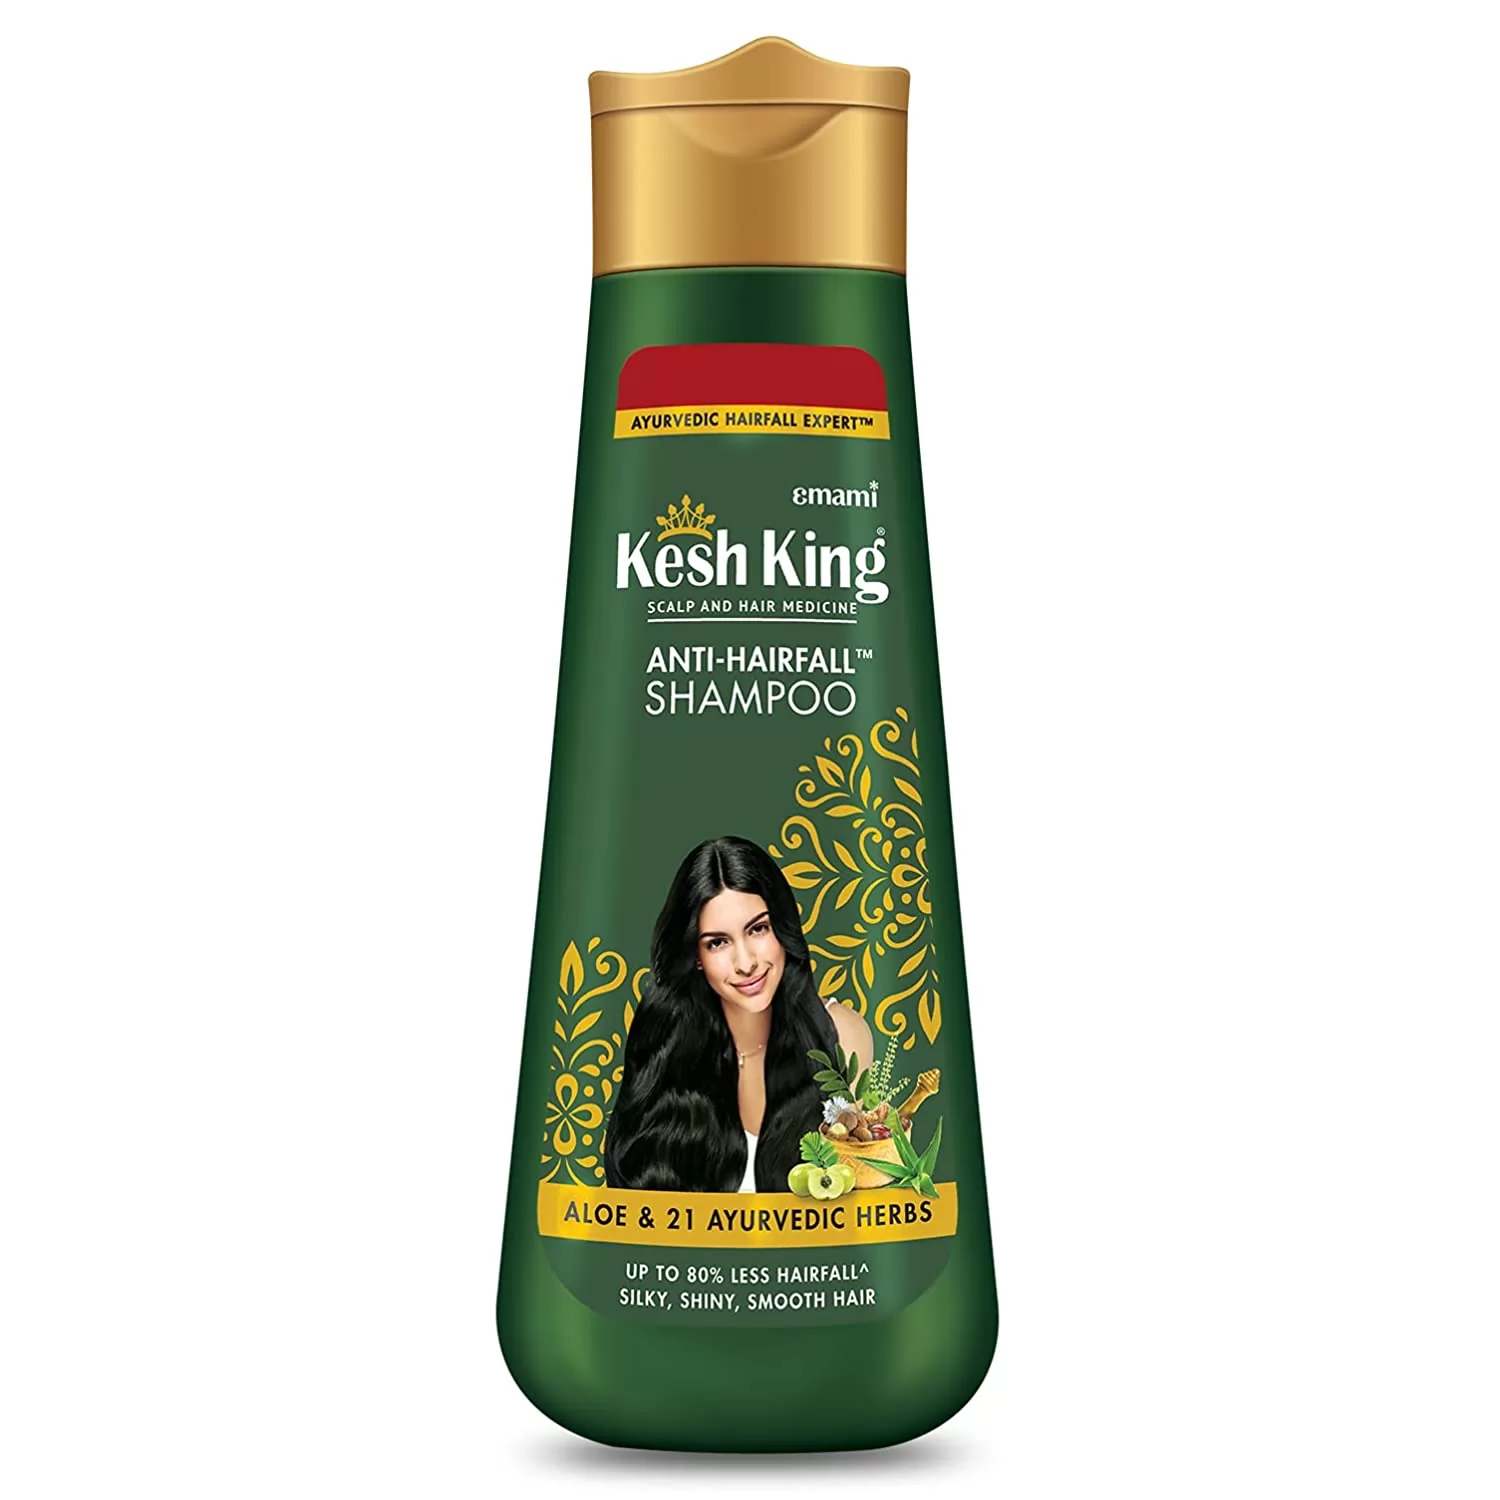 Kesh King Scalp & Hair Medicine Anti Hairfall Shampoo